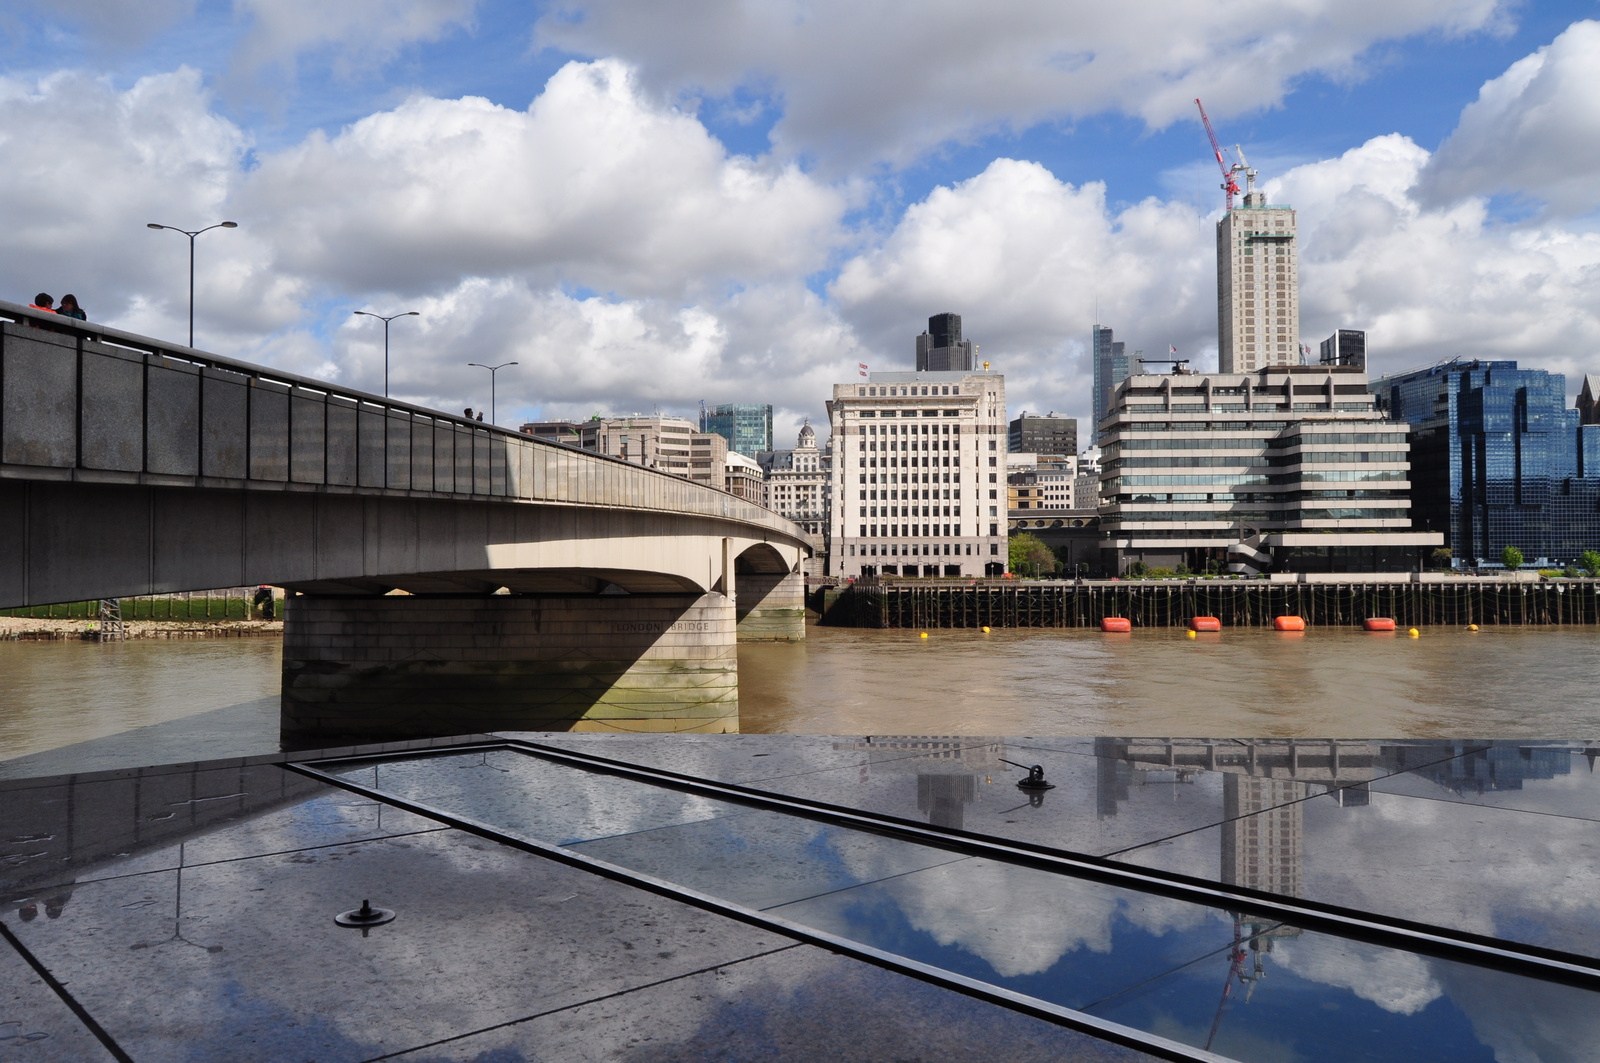 Thames- Reflection